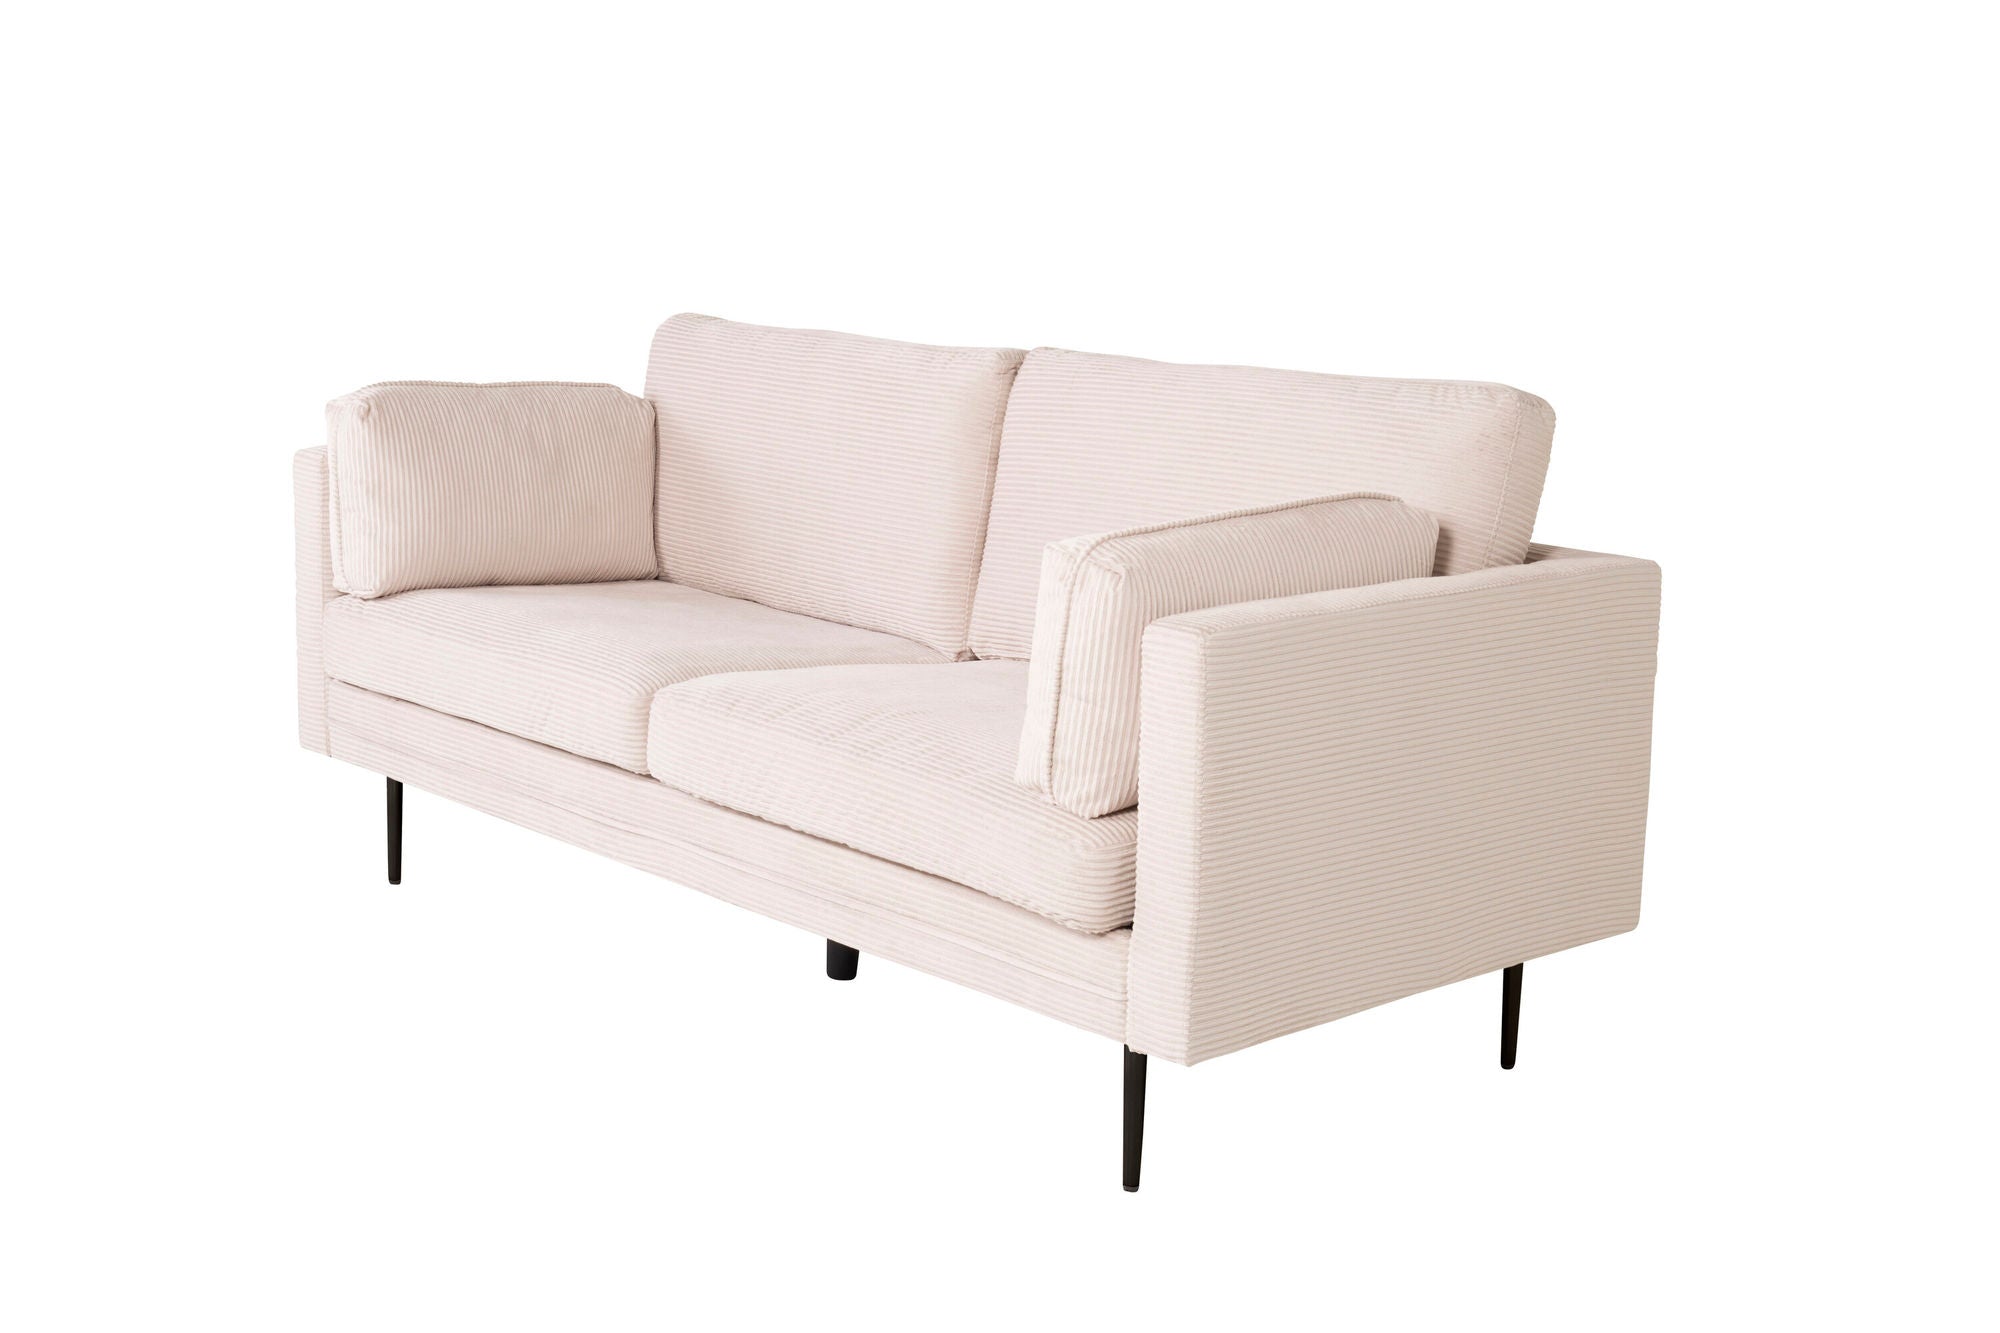 Venture Home Boom - 3 seat sofa Corduroy - Beige+Black Legs for Boom Sofa - FULL SET_1 - vivahabitat.com